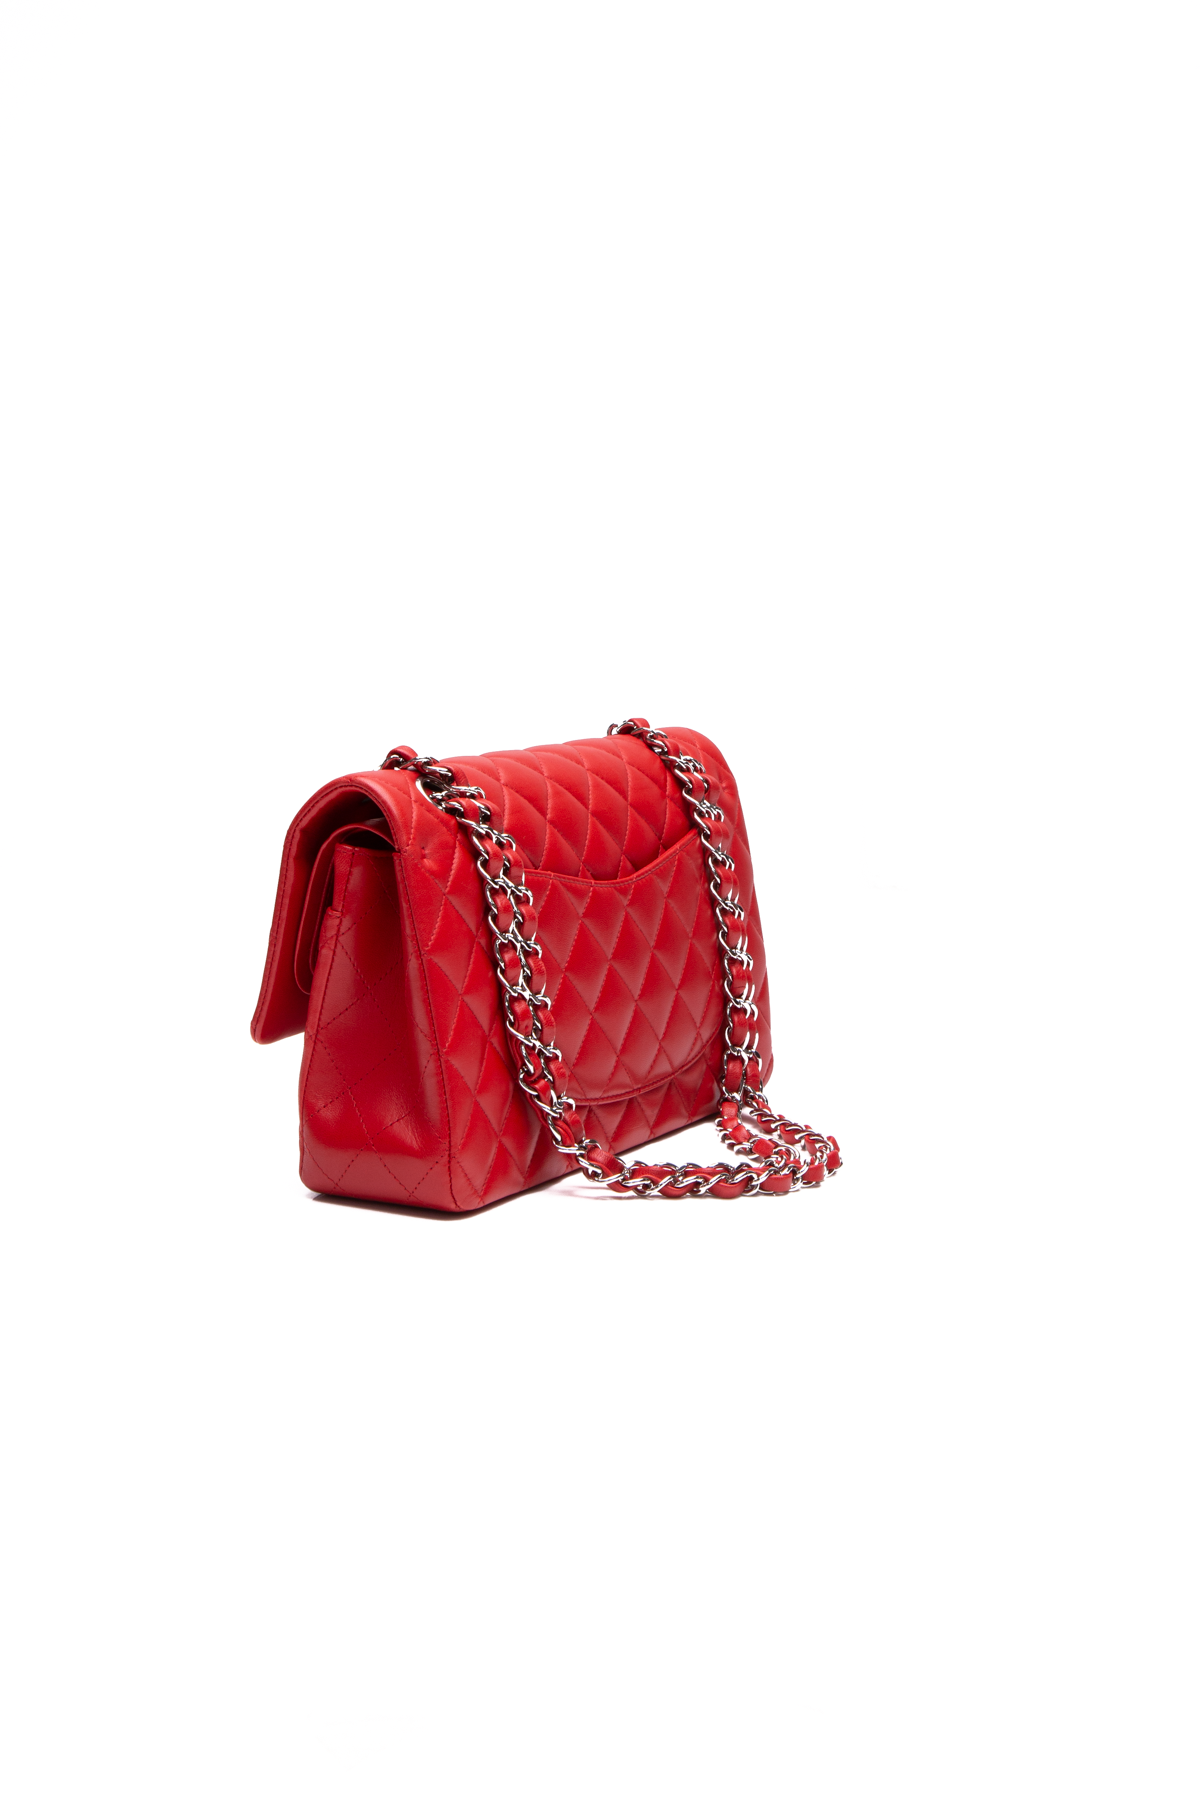 CHANEL Boy Flap Bag Red Cube Embossed Lambskin Leather Medium 2014